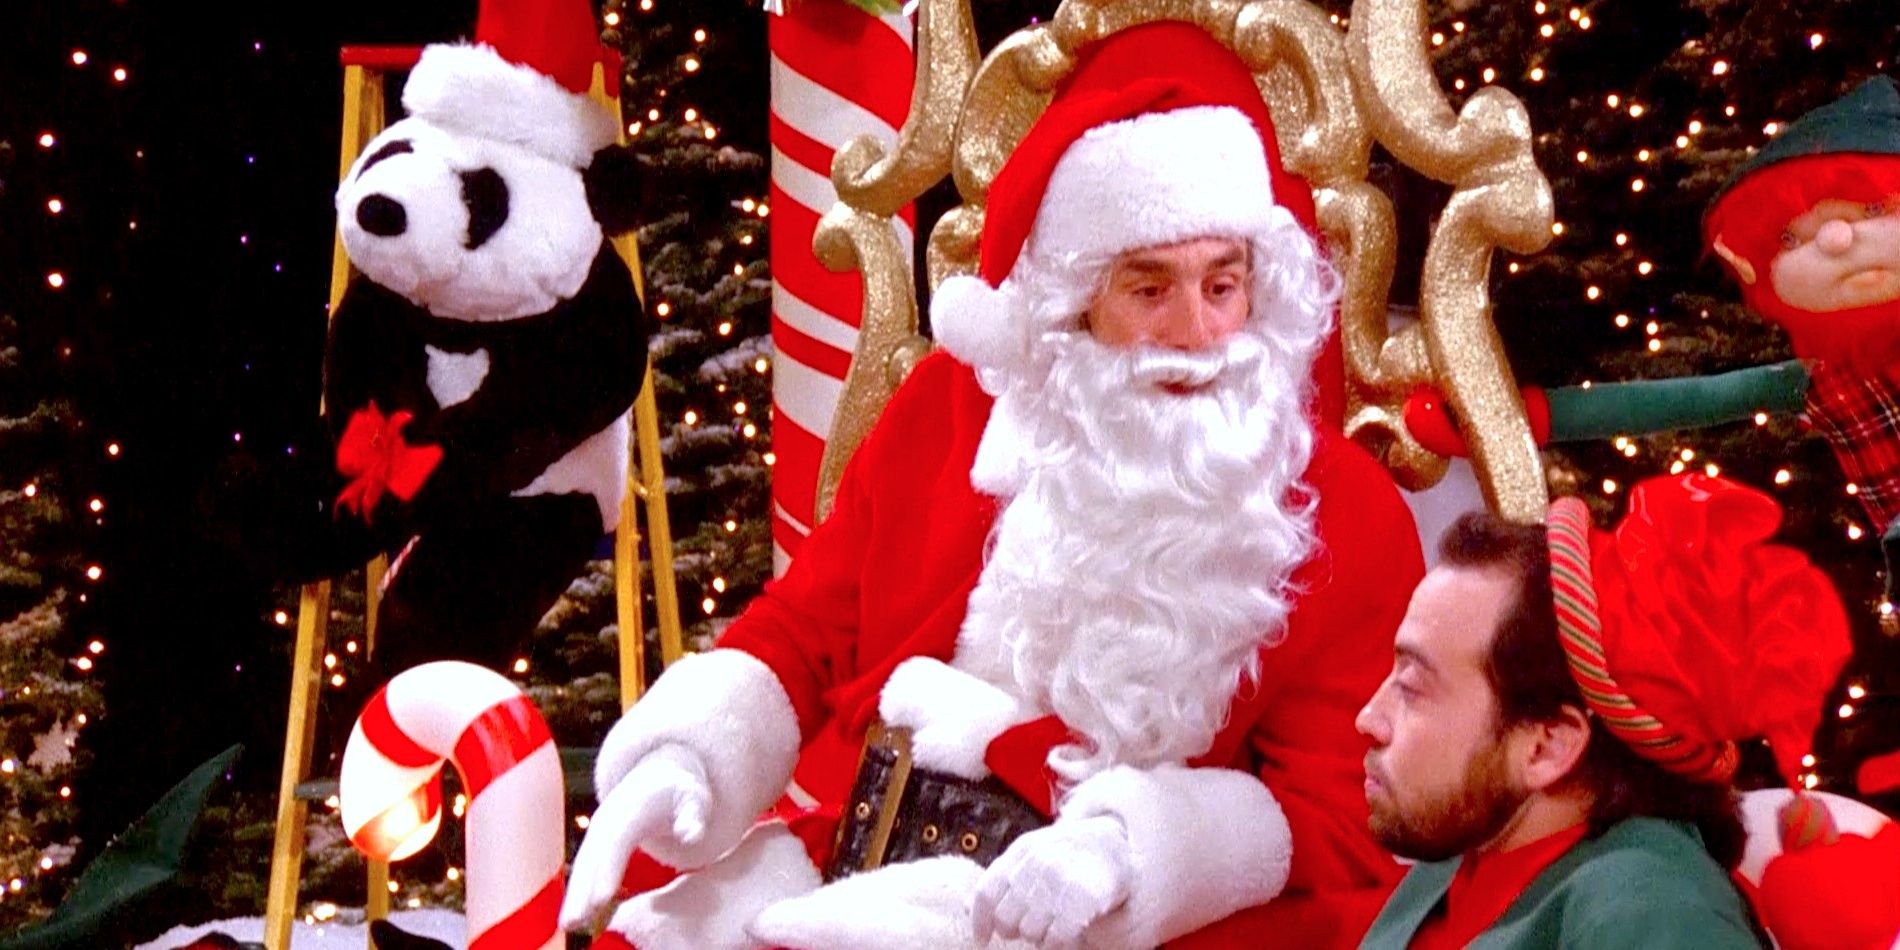 Kramer as Santa in Seinfeld - The Race